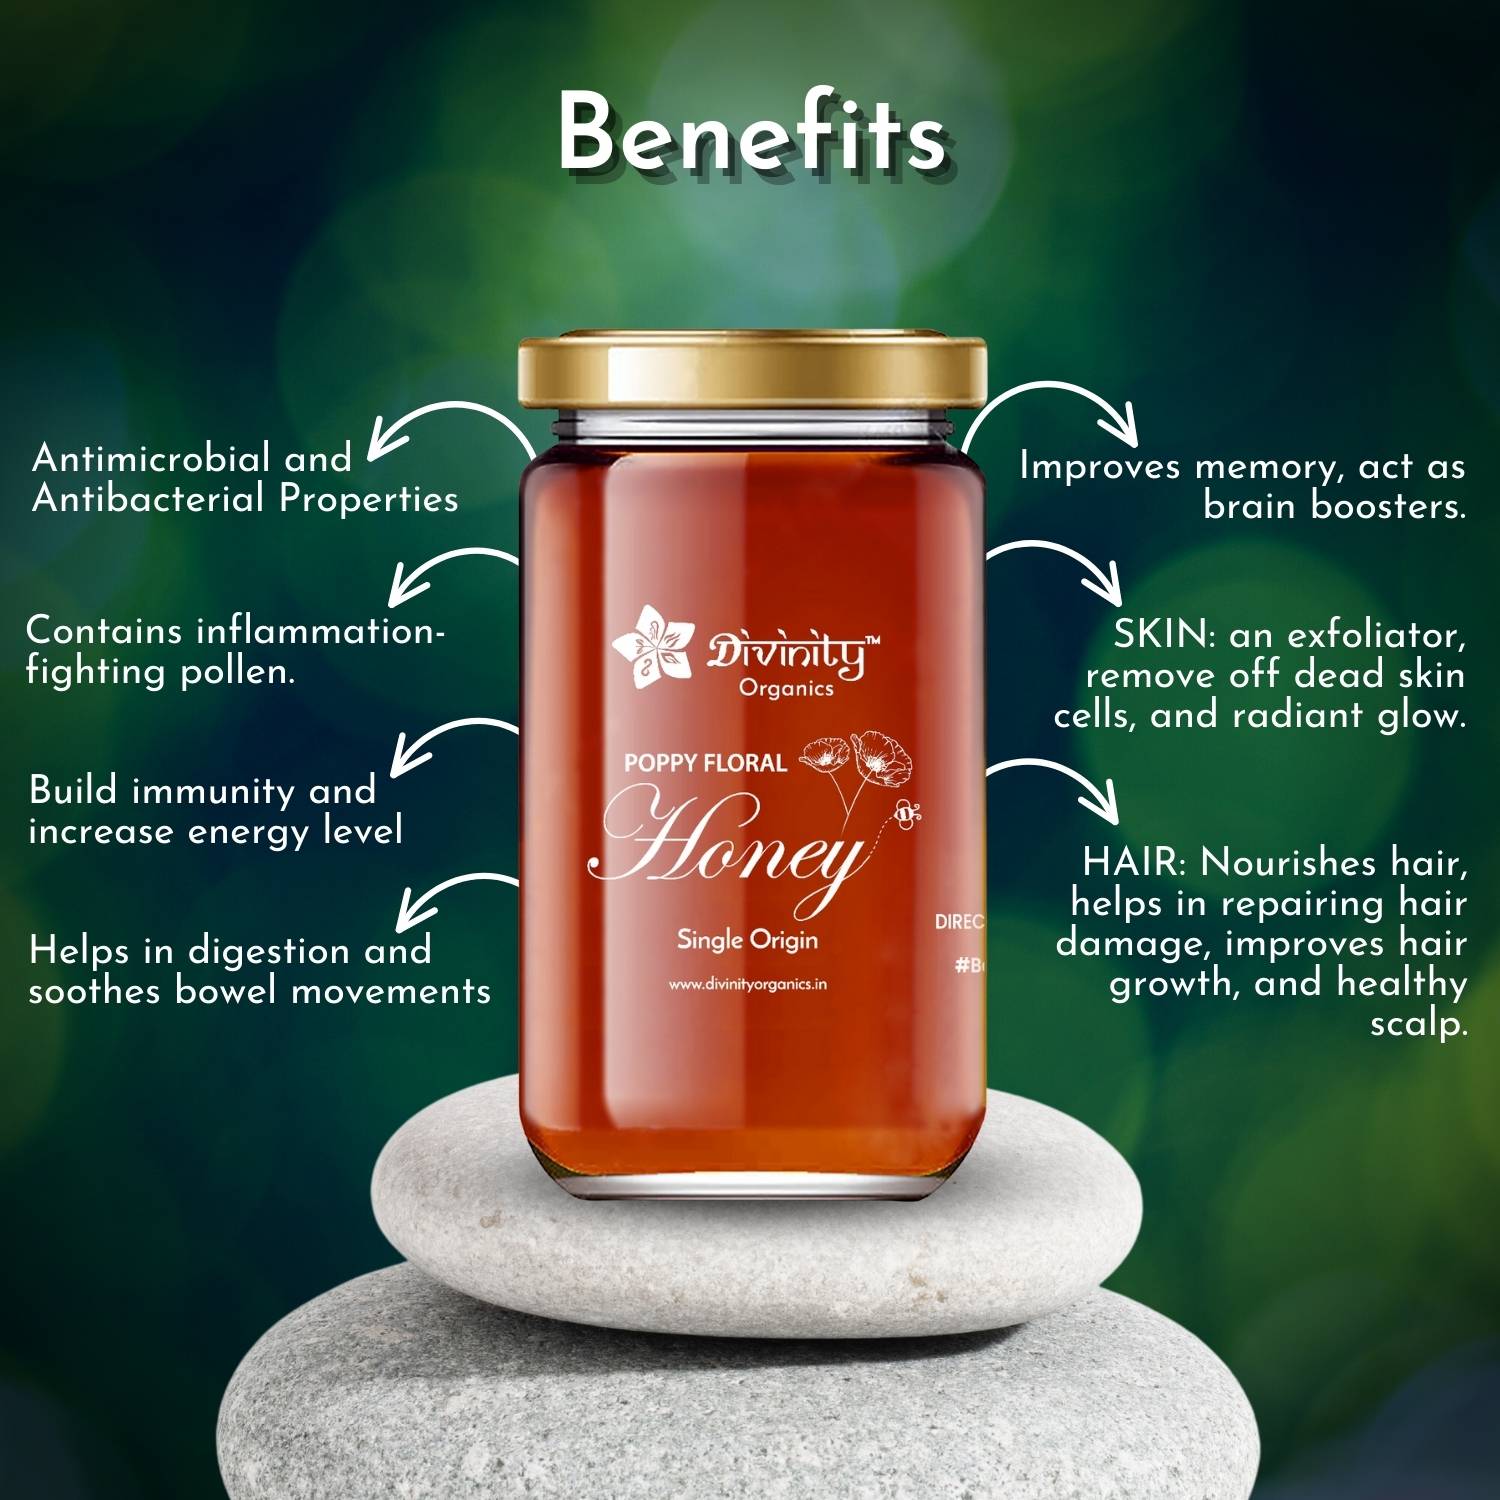 Divinity Organics - Poppy Floral Honey Benefits